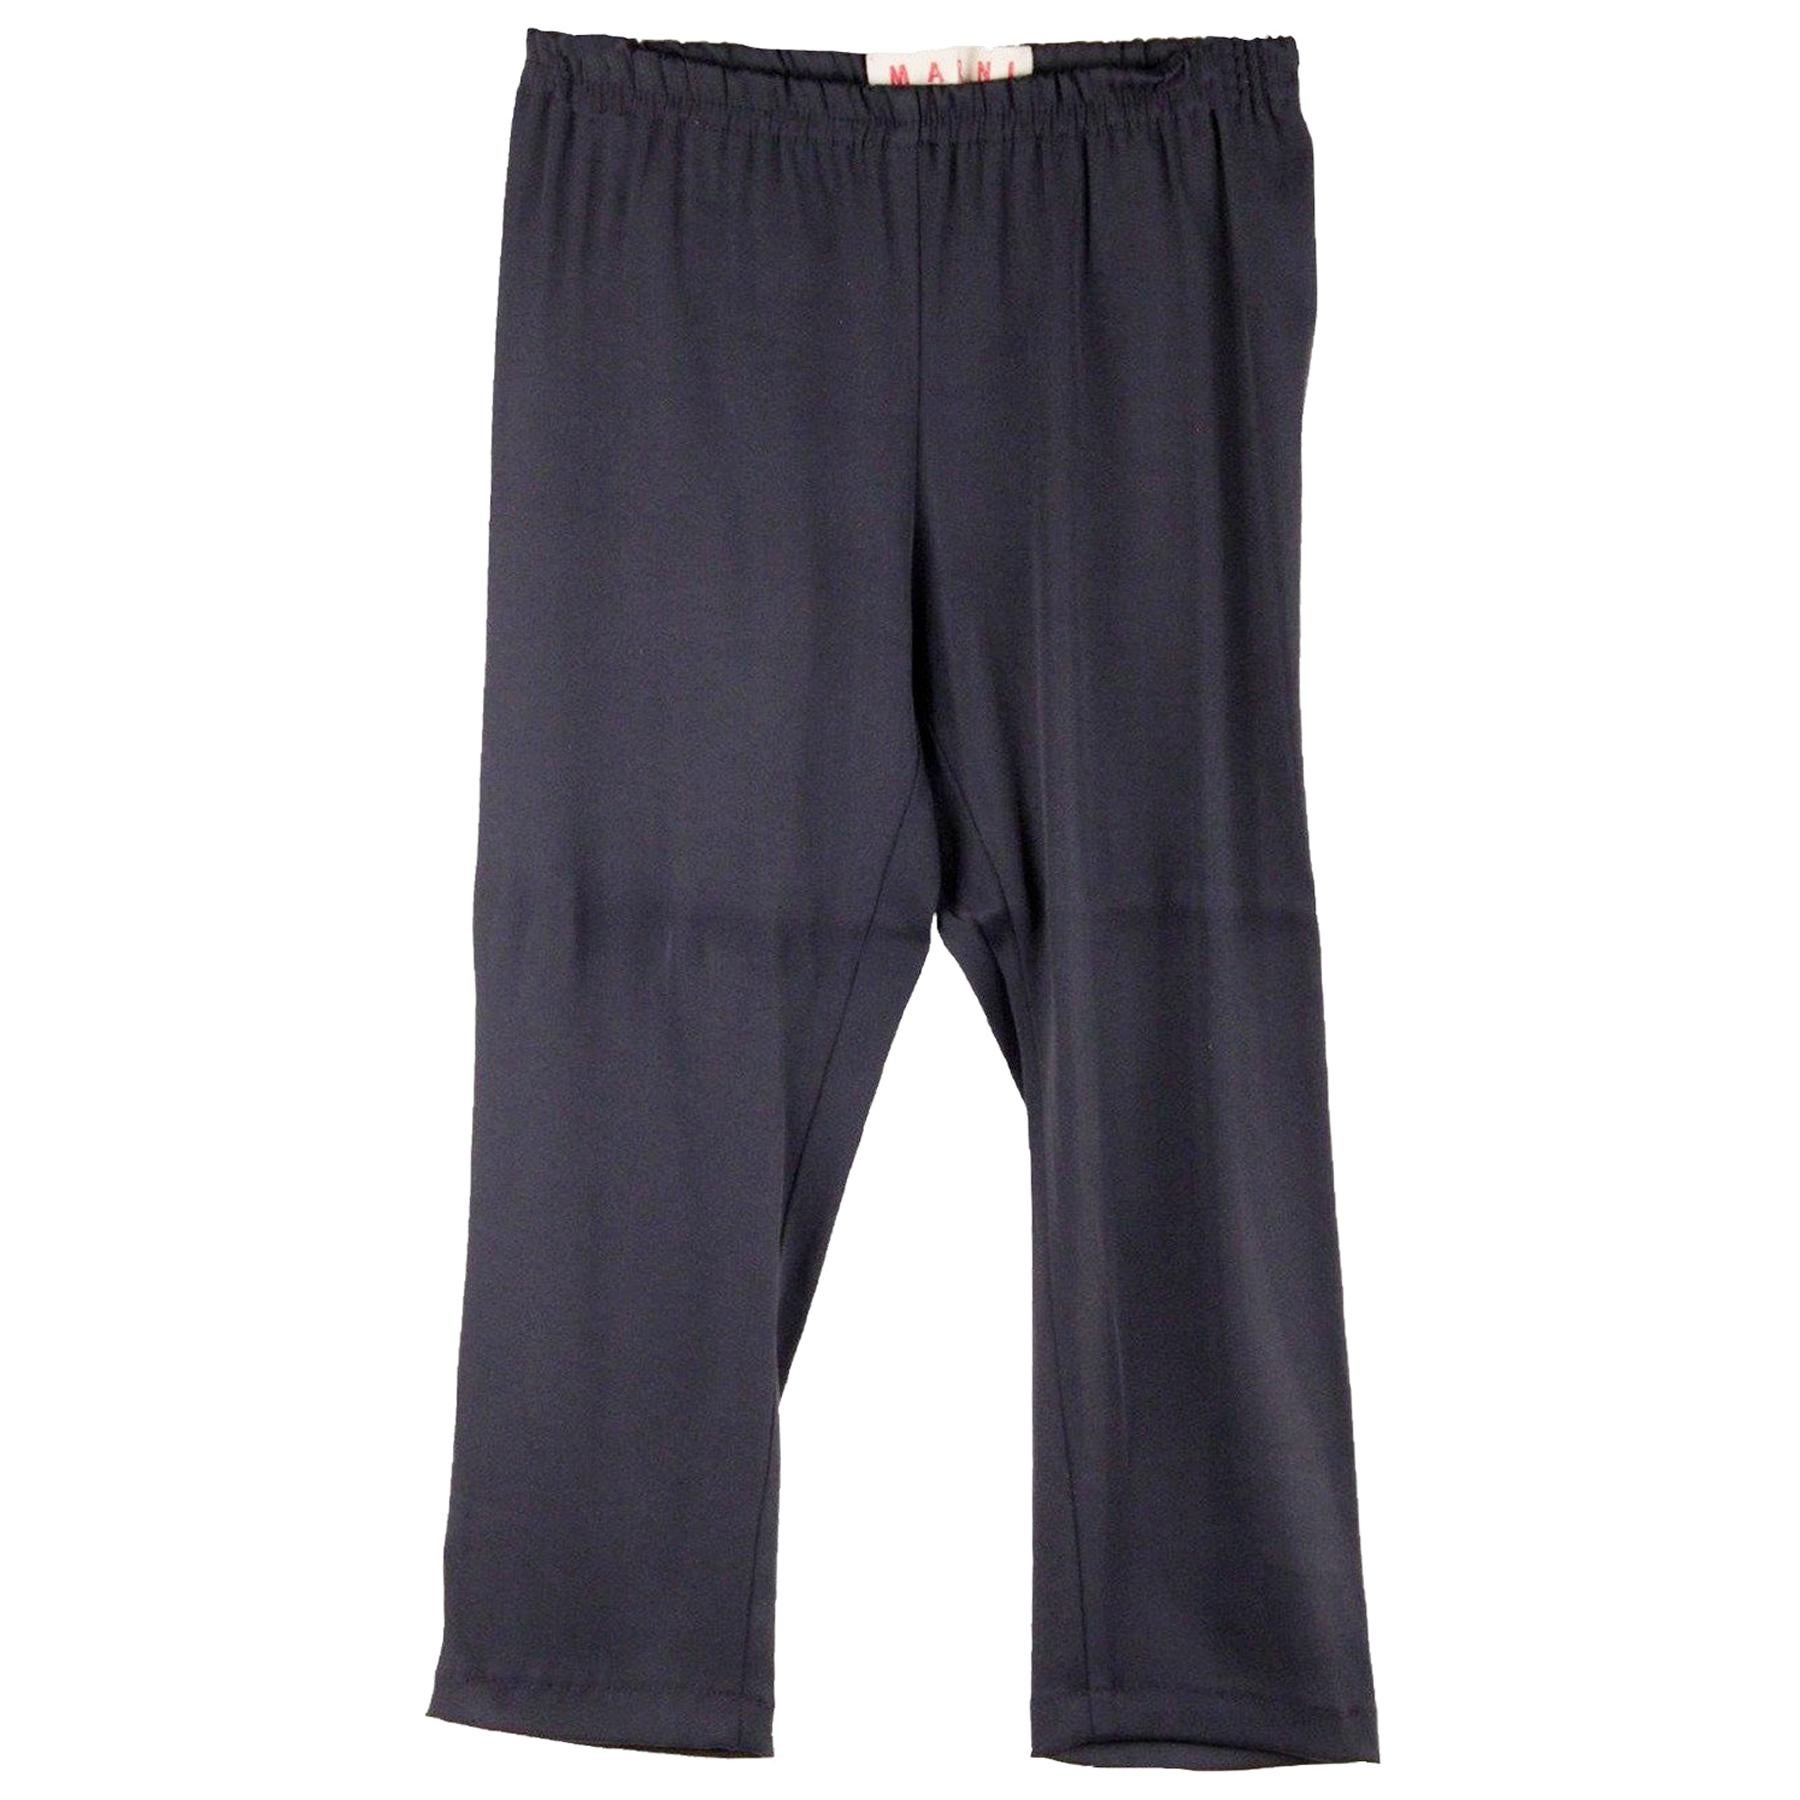 Marni Blue Stretch Jersey Cropped Leggings Pants Size 44